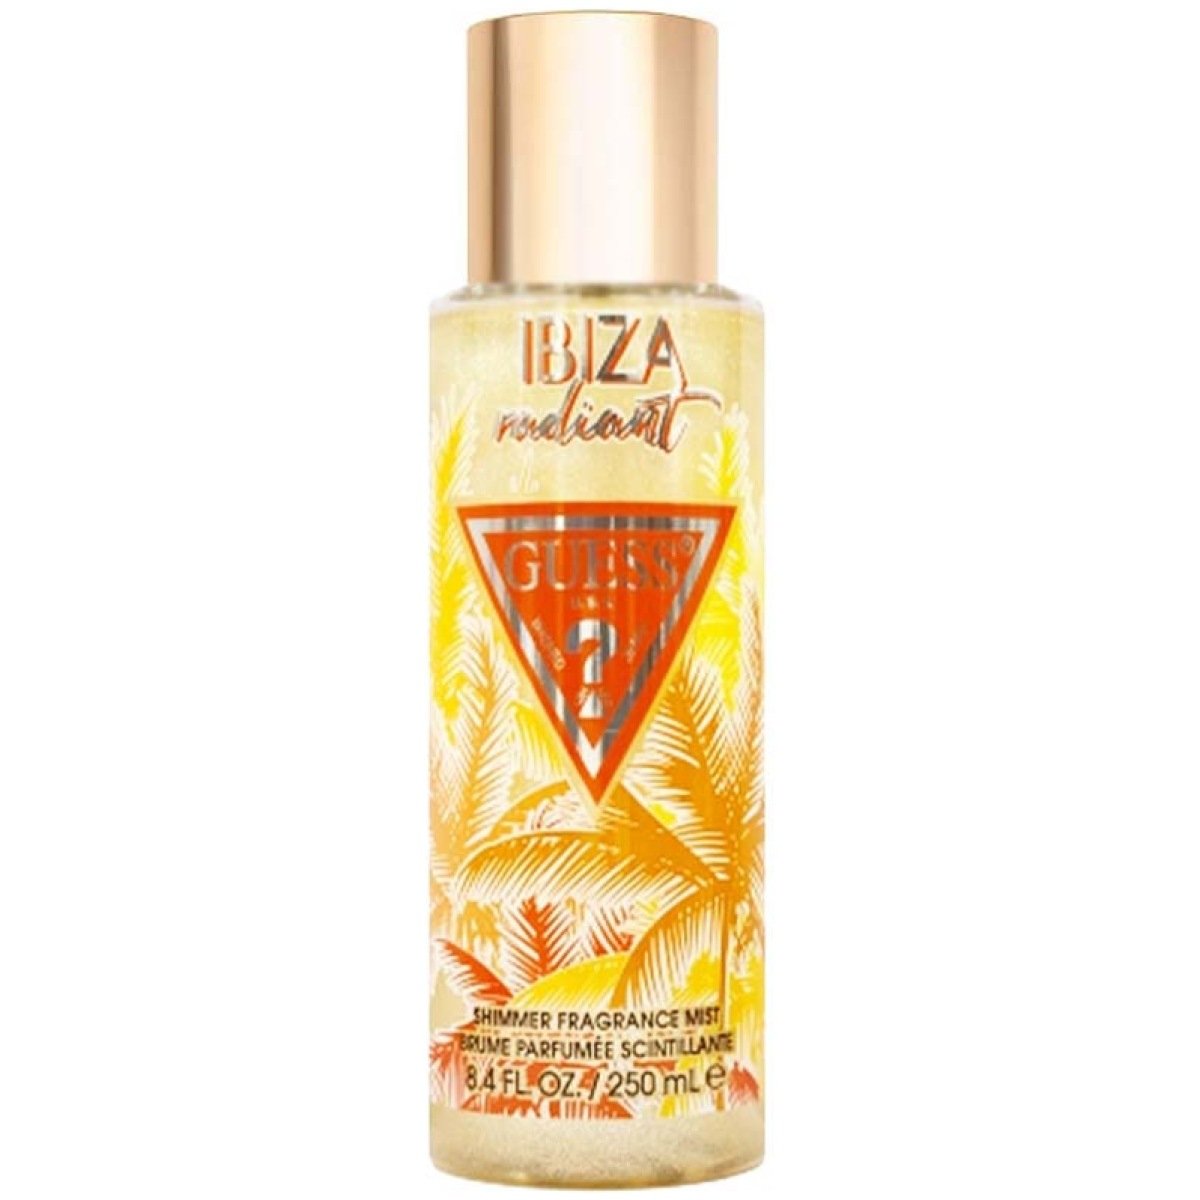 Guess Destination Ibiza Radiant Shimmer Fragrance Body Mist 250 ml